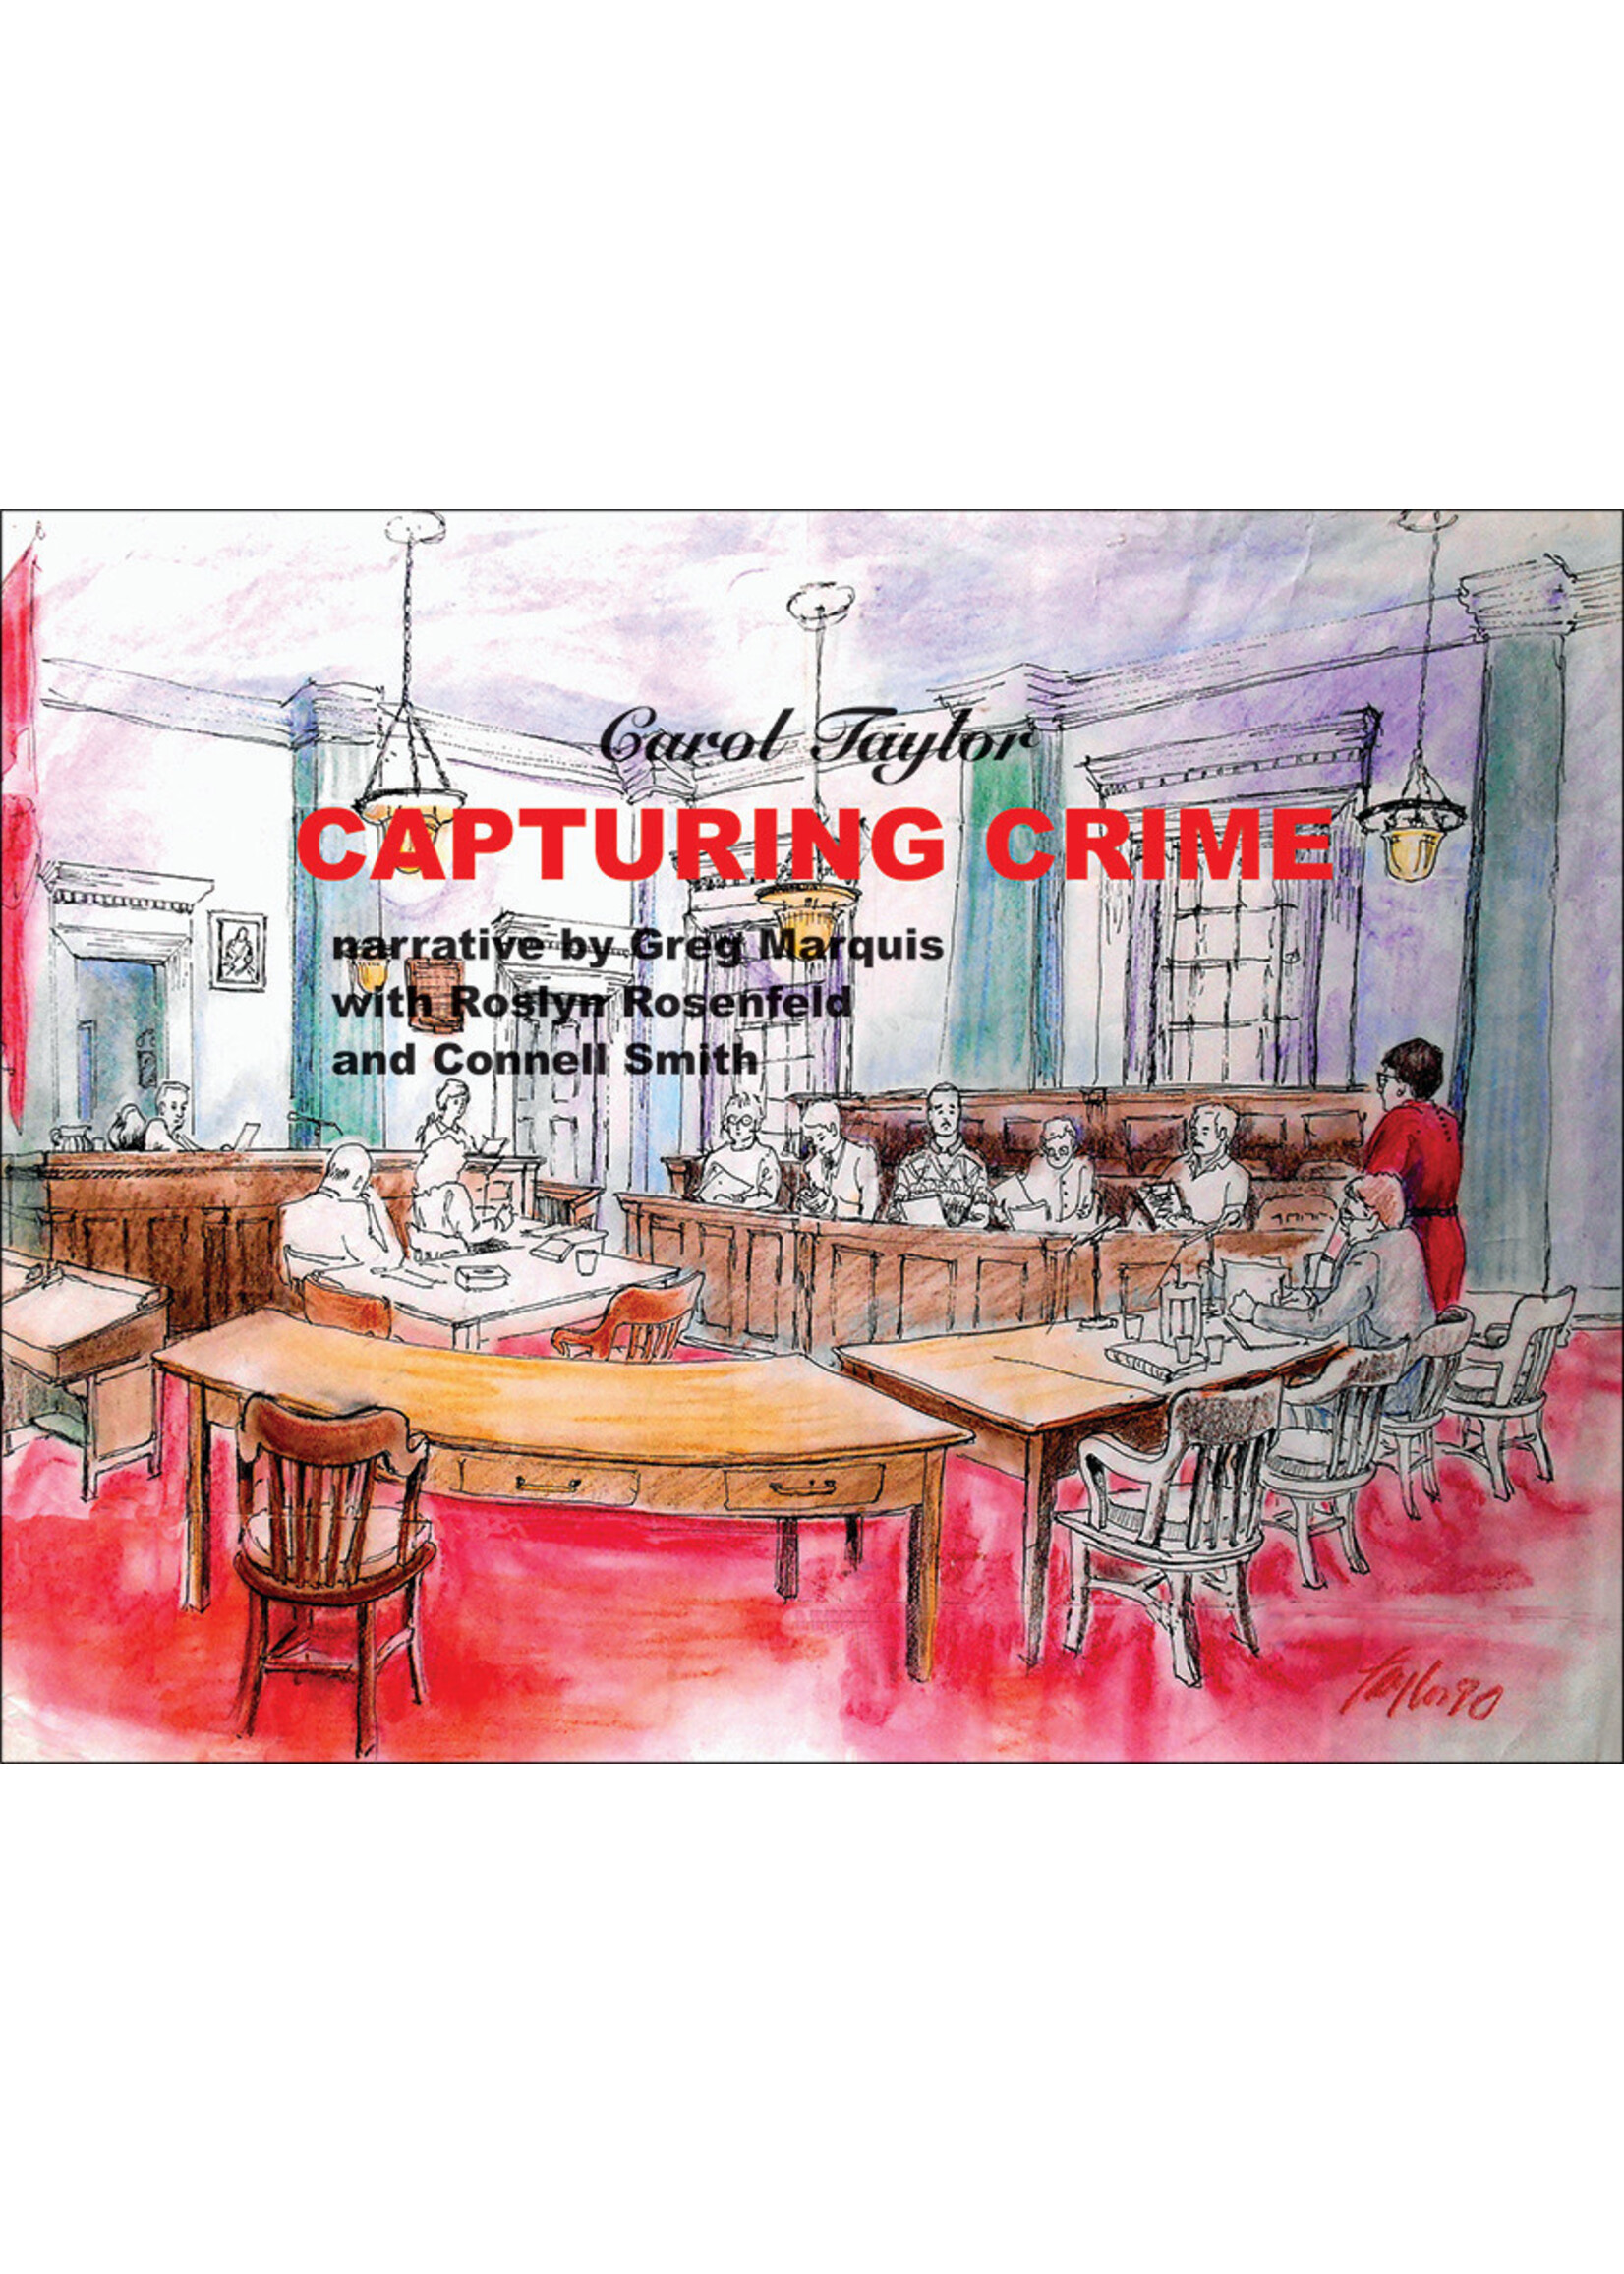 Capturing Crime by Carol Taylor